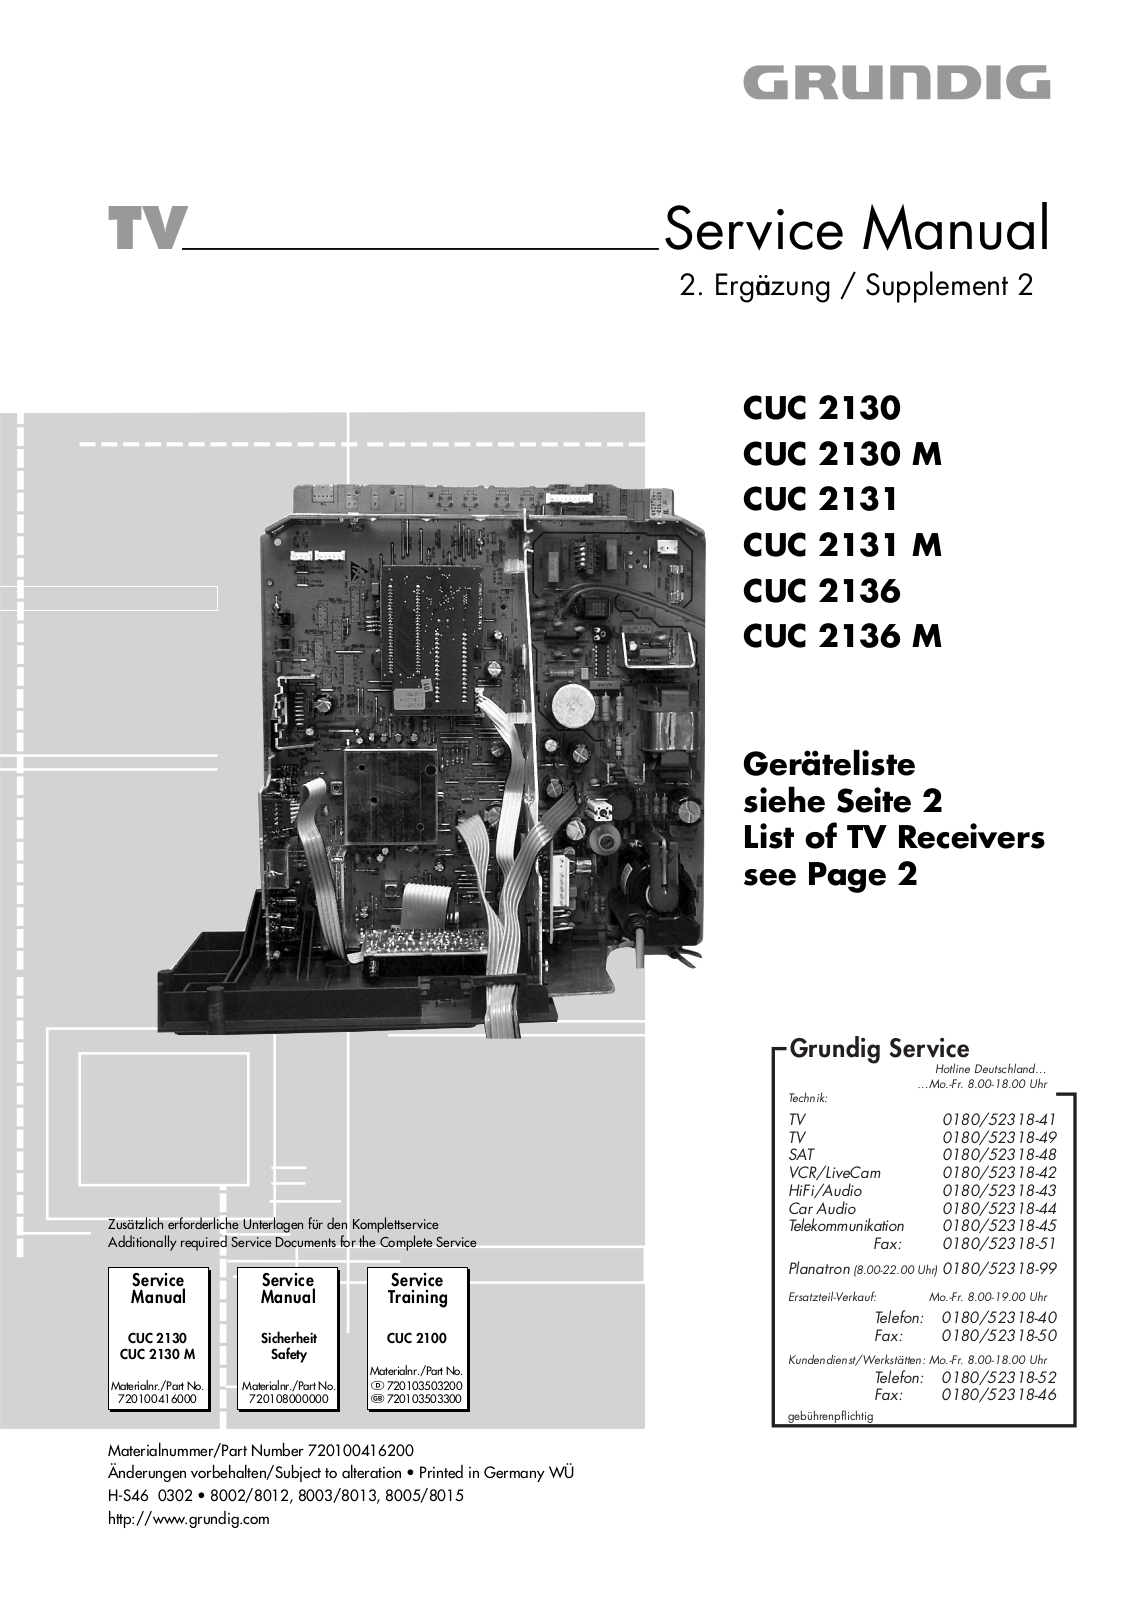 Grundig ST 63-4101-8, ST 70-5101-8, CUC 2131 M, MF 72-3101-8, ELEGANCE 63 Service Manual